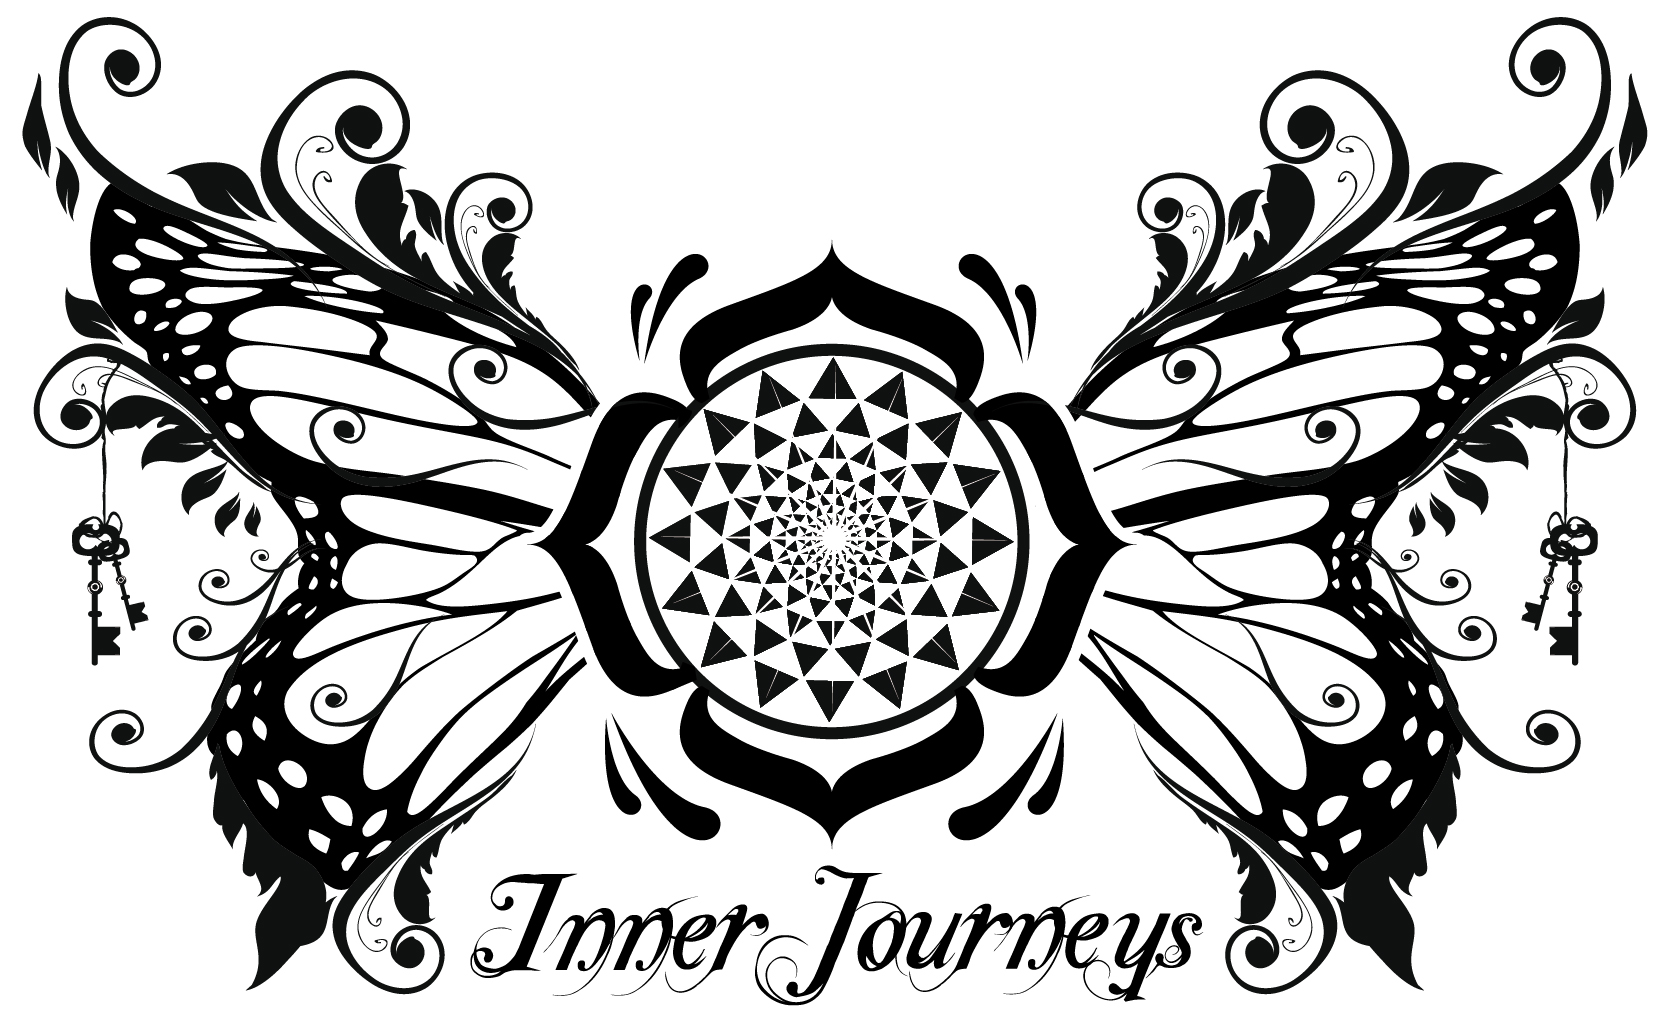 Welcome to Inner Journeys